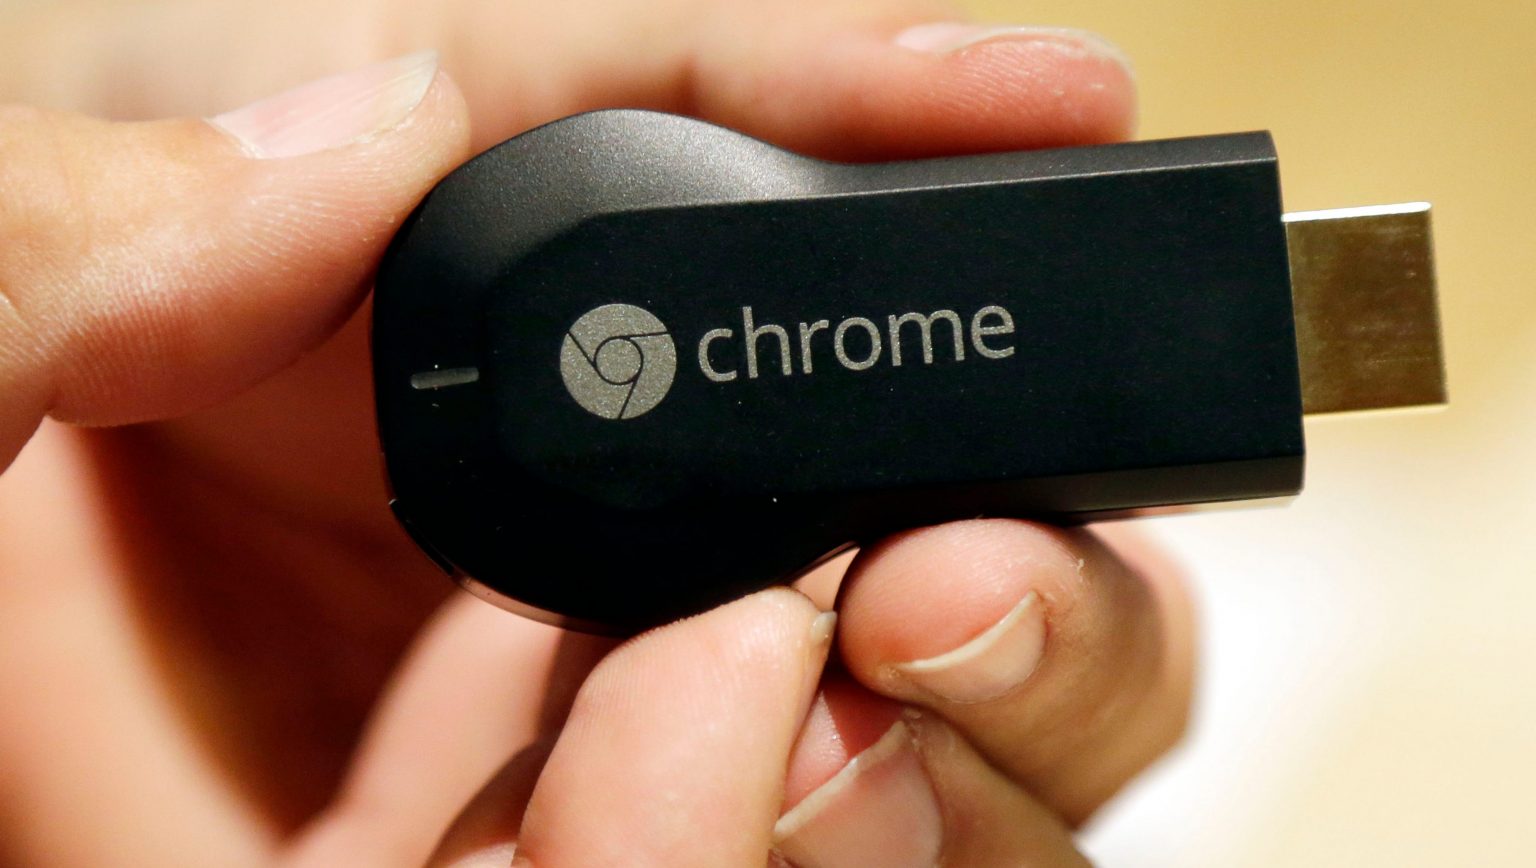 google chromecast remote control light on